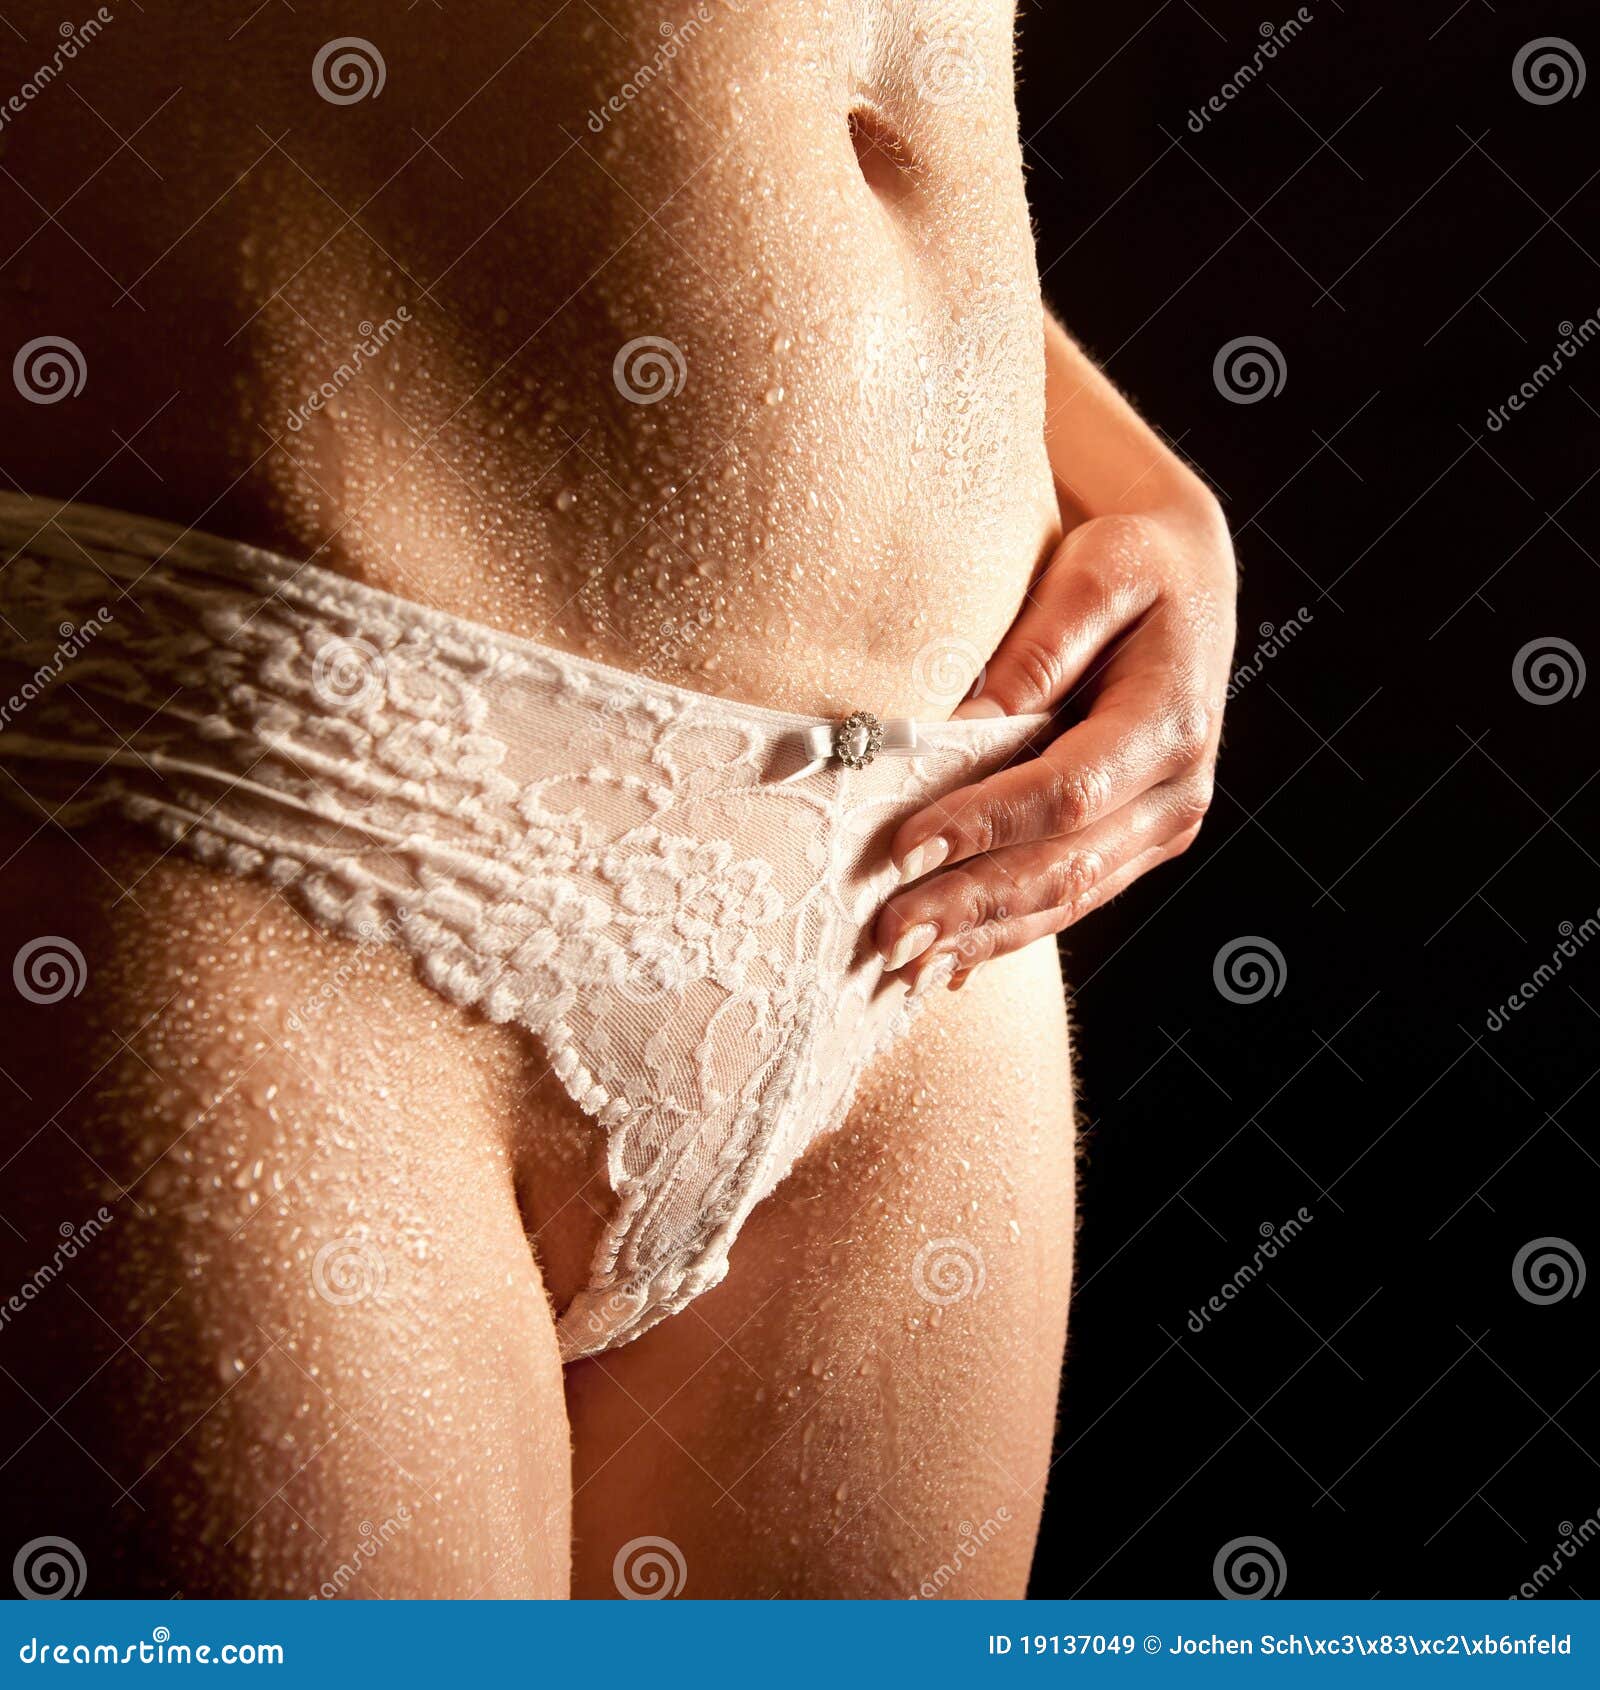 ali rehman khan recommends women in wet panties pic